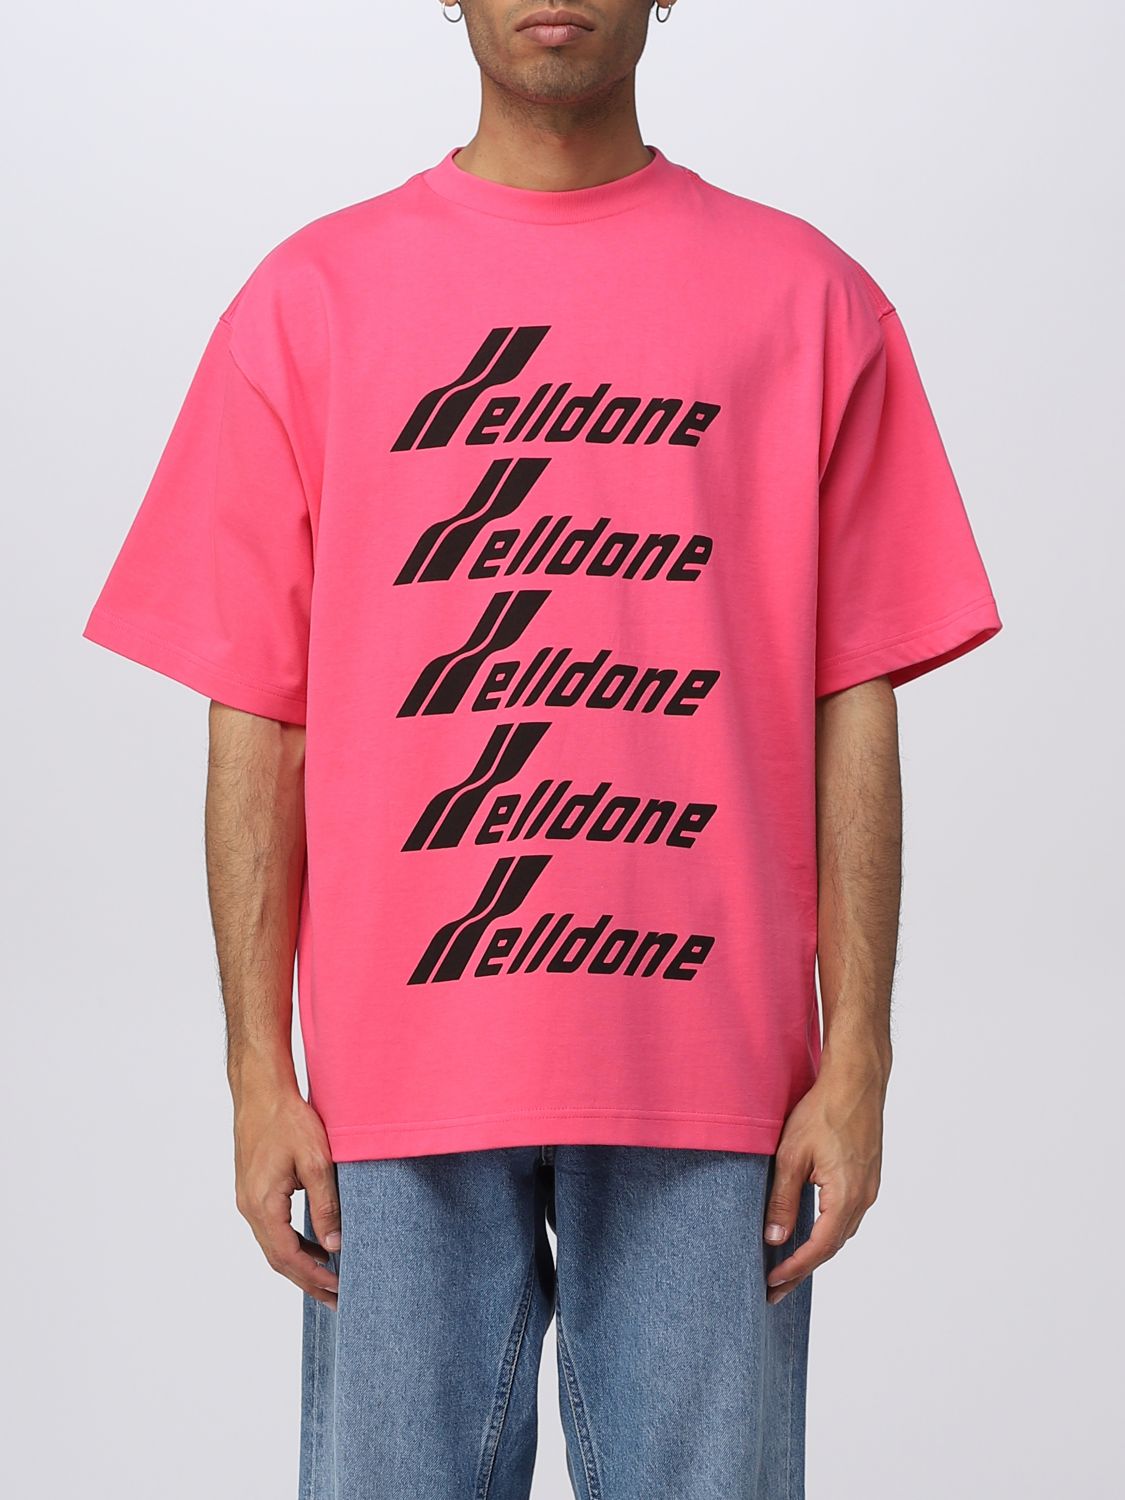 WE11DONE: t-shirt for man - Pink | We11Done t-shirt WDTP620074U online ...